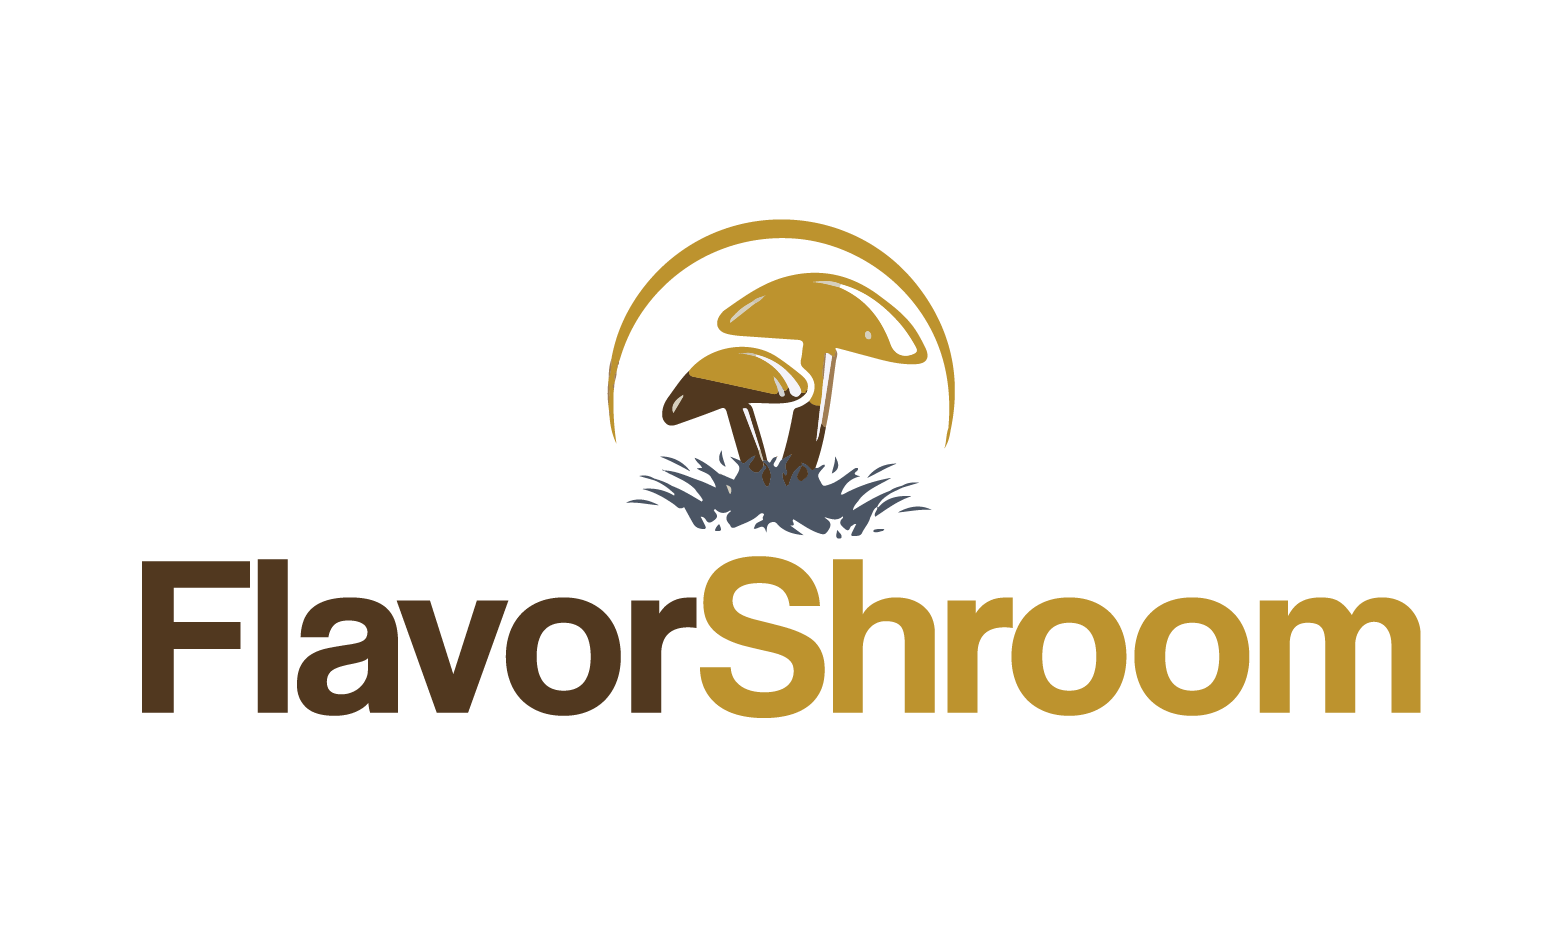 FlavorShroom.com - Creative brandable domain for sale